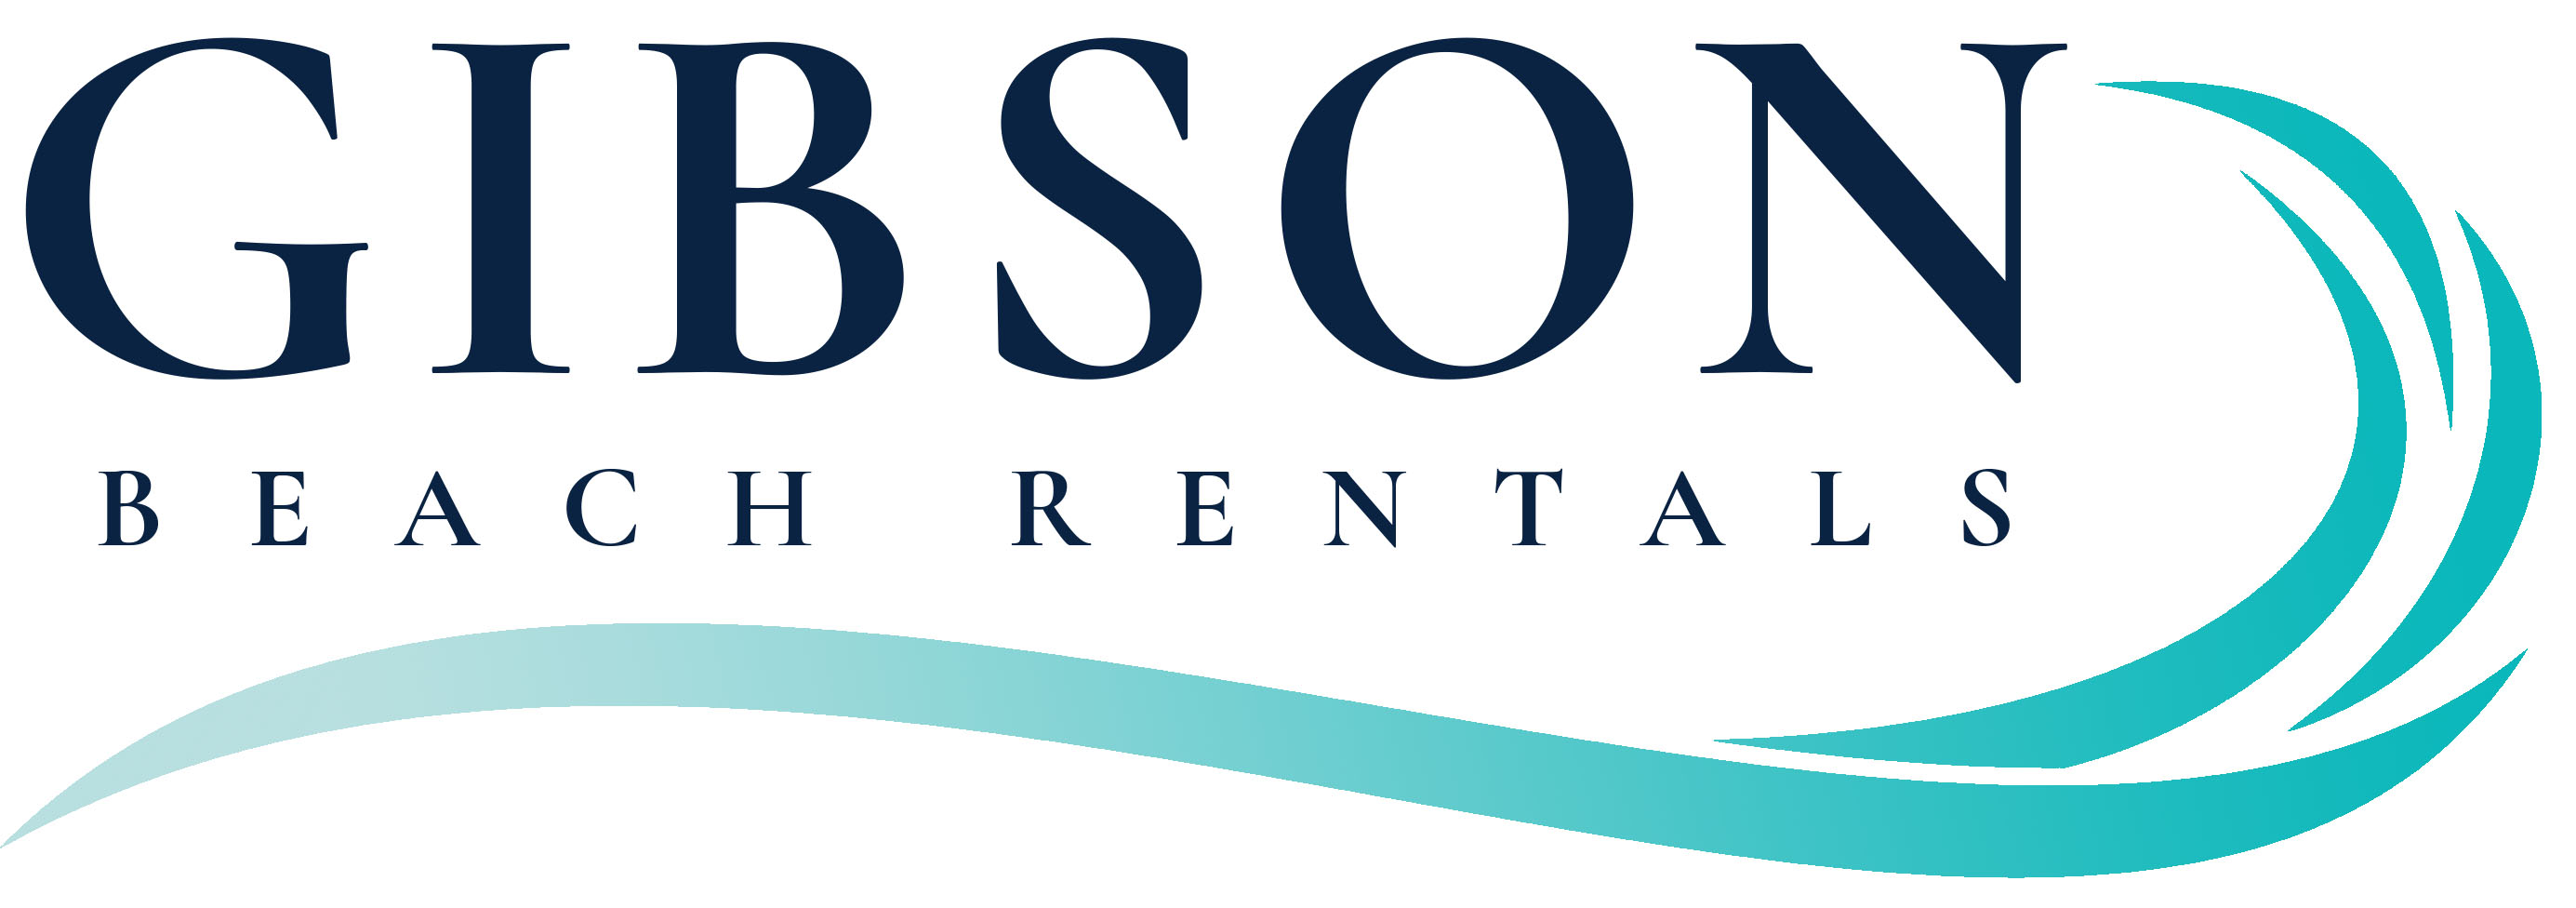 Gibson Beach Rentals - Vacation Rentals and Property Management for the Destin Neighborhoods of Sandestin and Miramar Beach Florida.